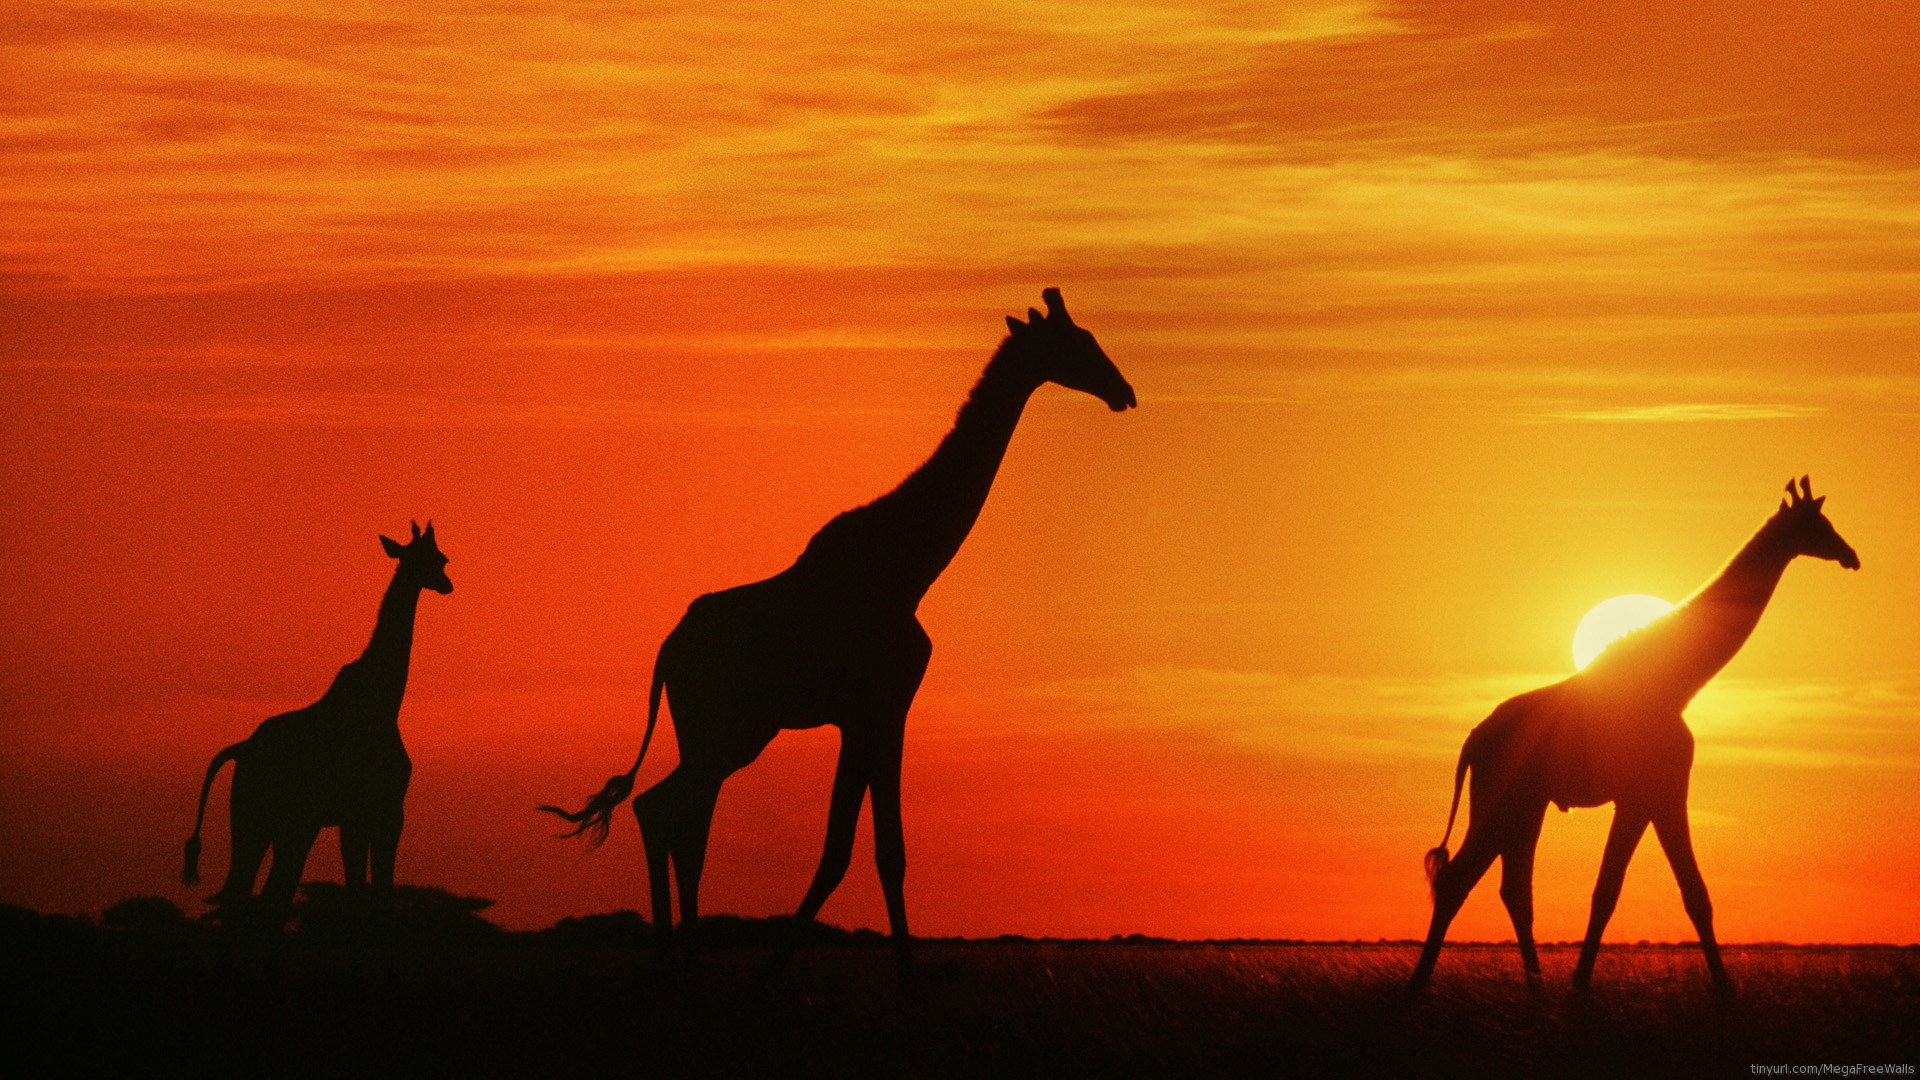 533670 descargar imagen jirafa, animales, color naranja), silueta, atardecer: fondos de pantalla y protectores de pantalla gratis